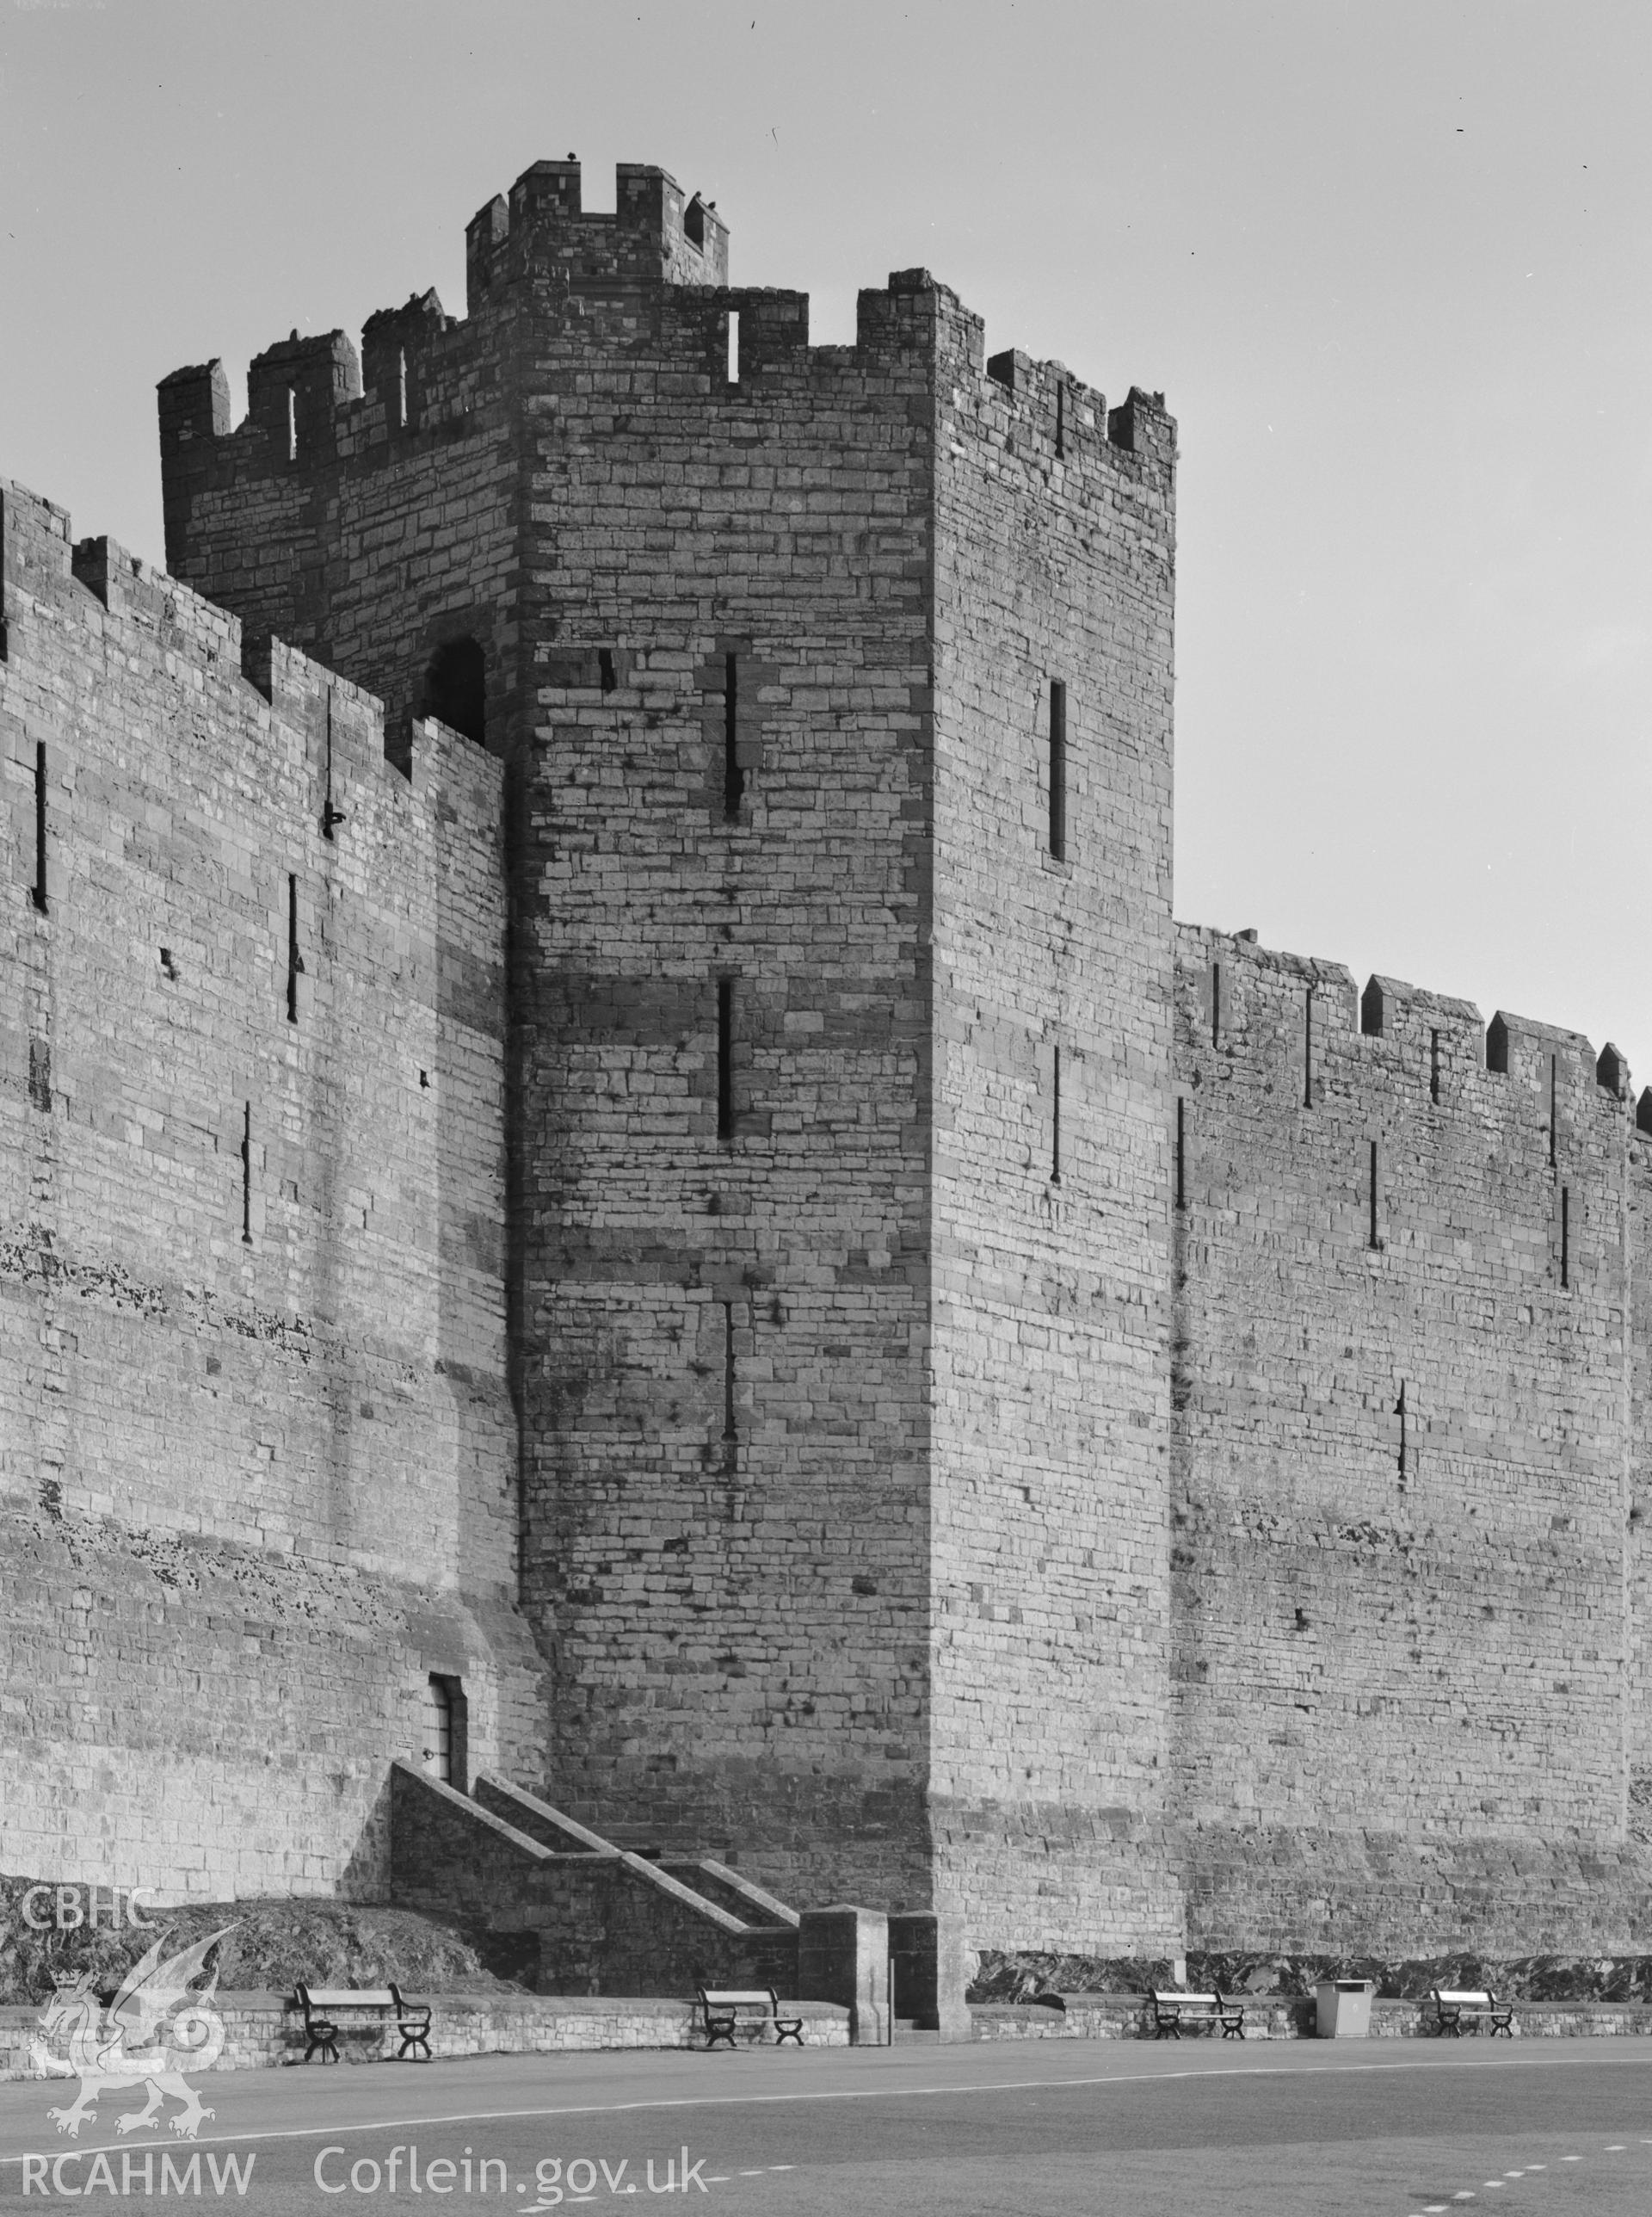 D.O.E photograph of Caernarfon Castle - tower and sally port.